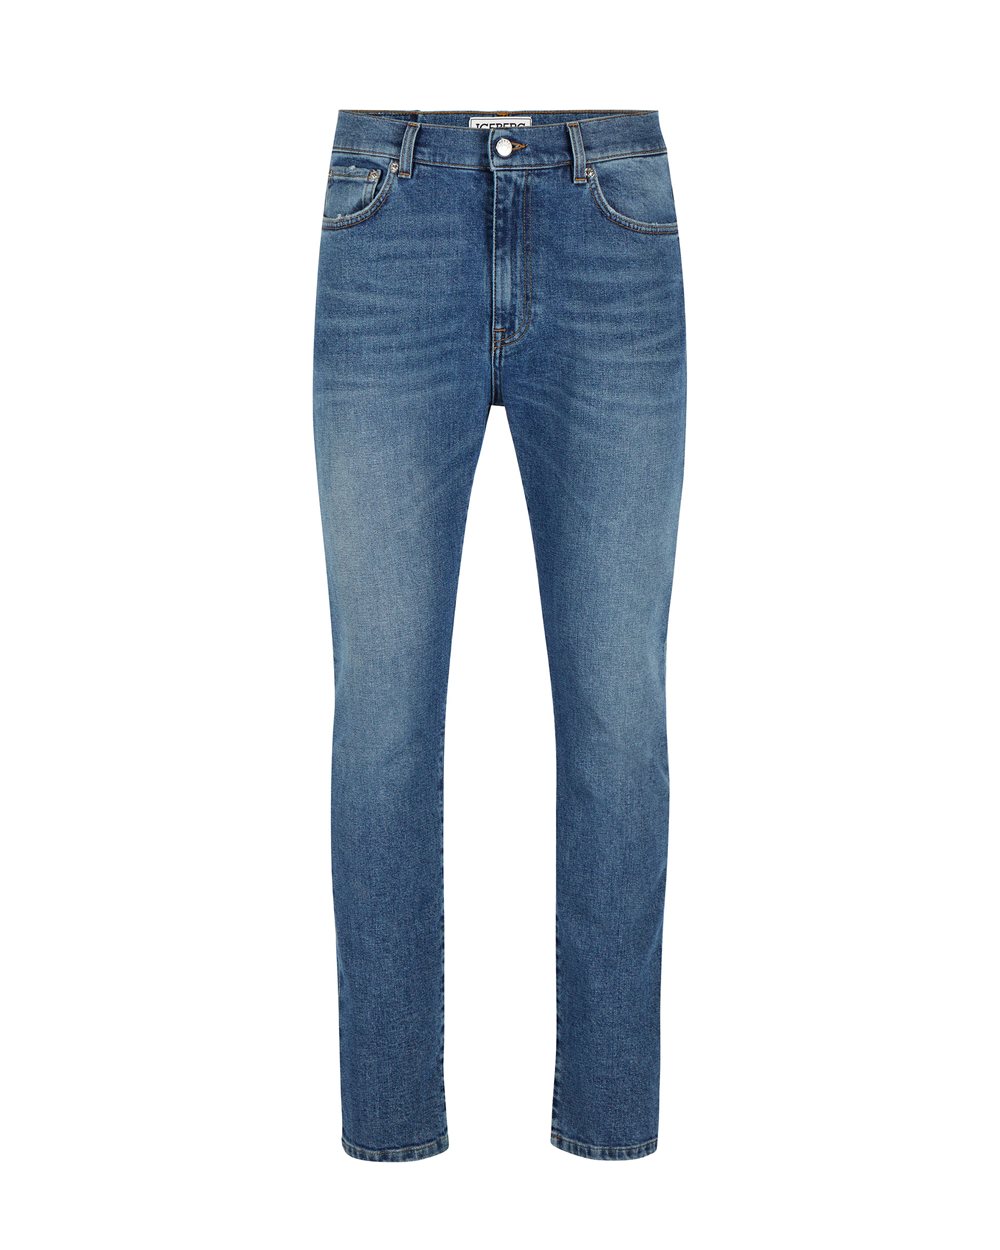 Faded 5-pocket blue jeans | Iceberg - Official Website